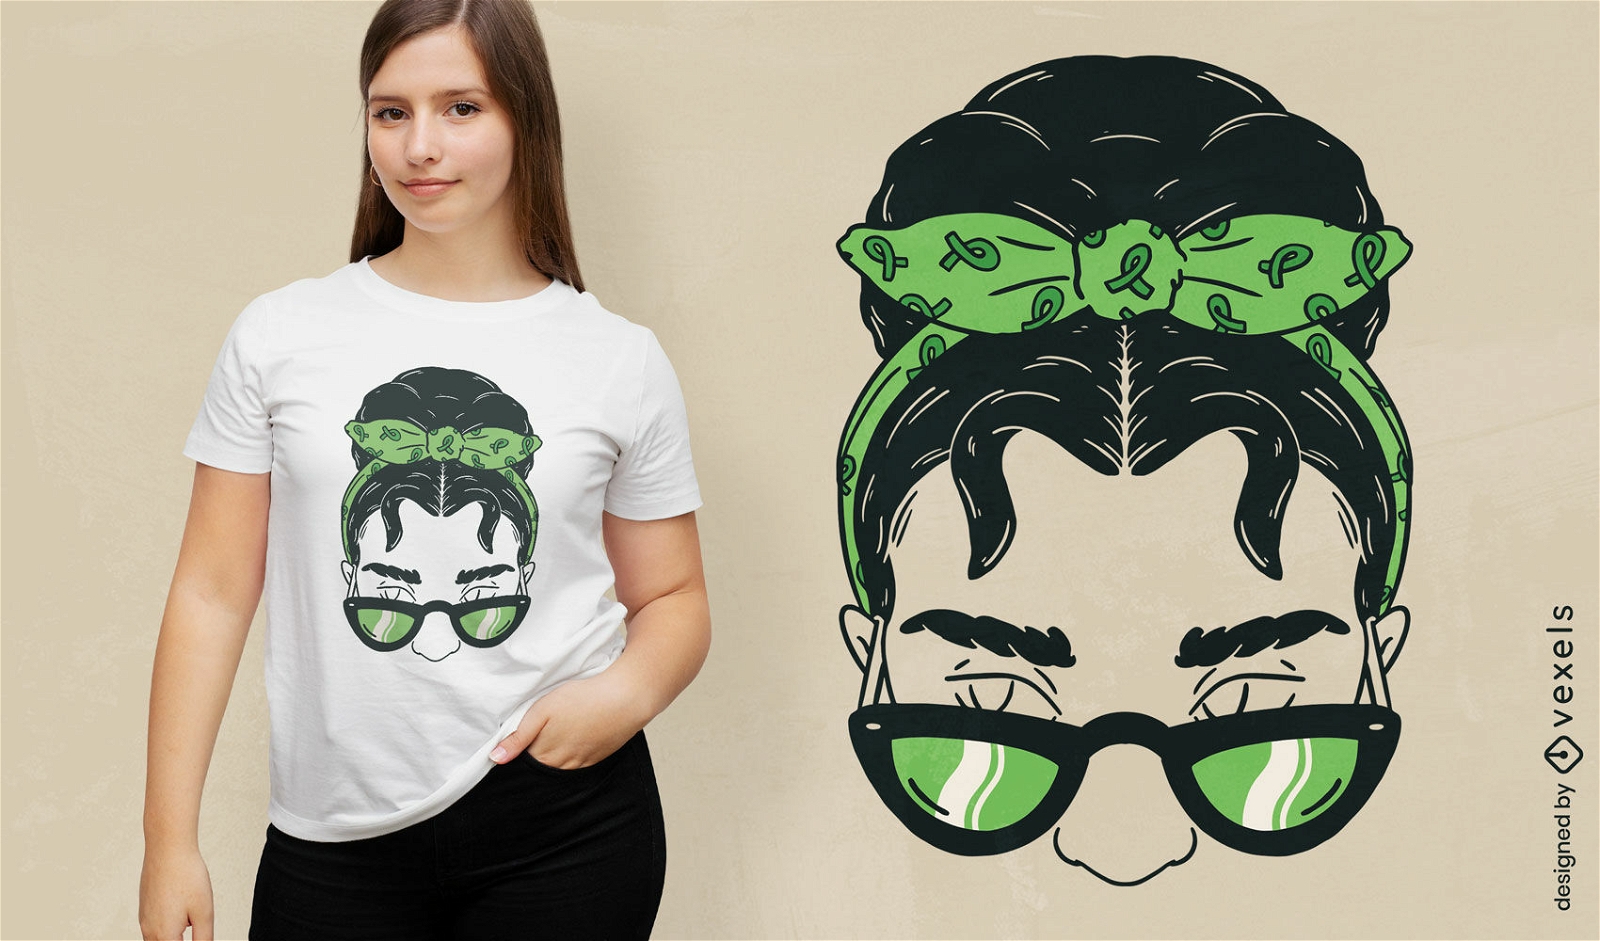 Green ribbon hairband girl t-shirt design